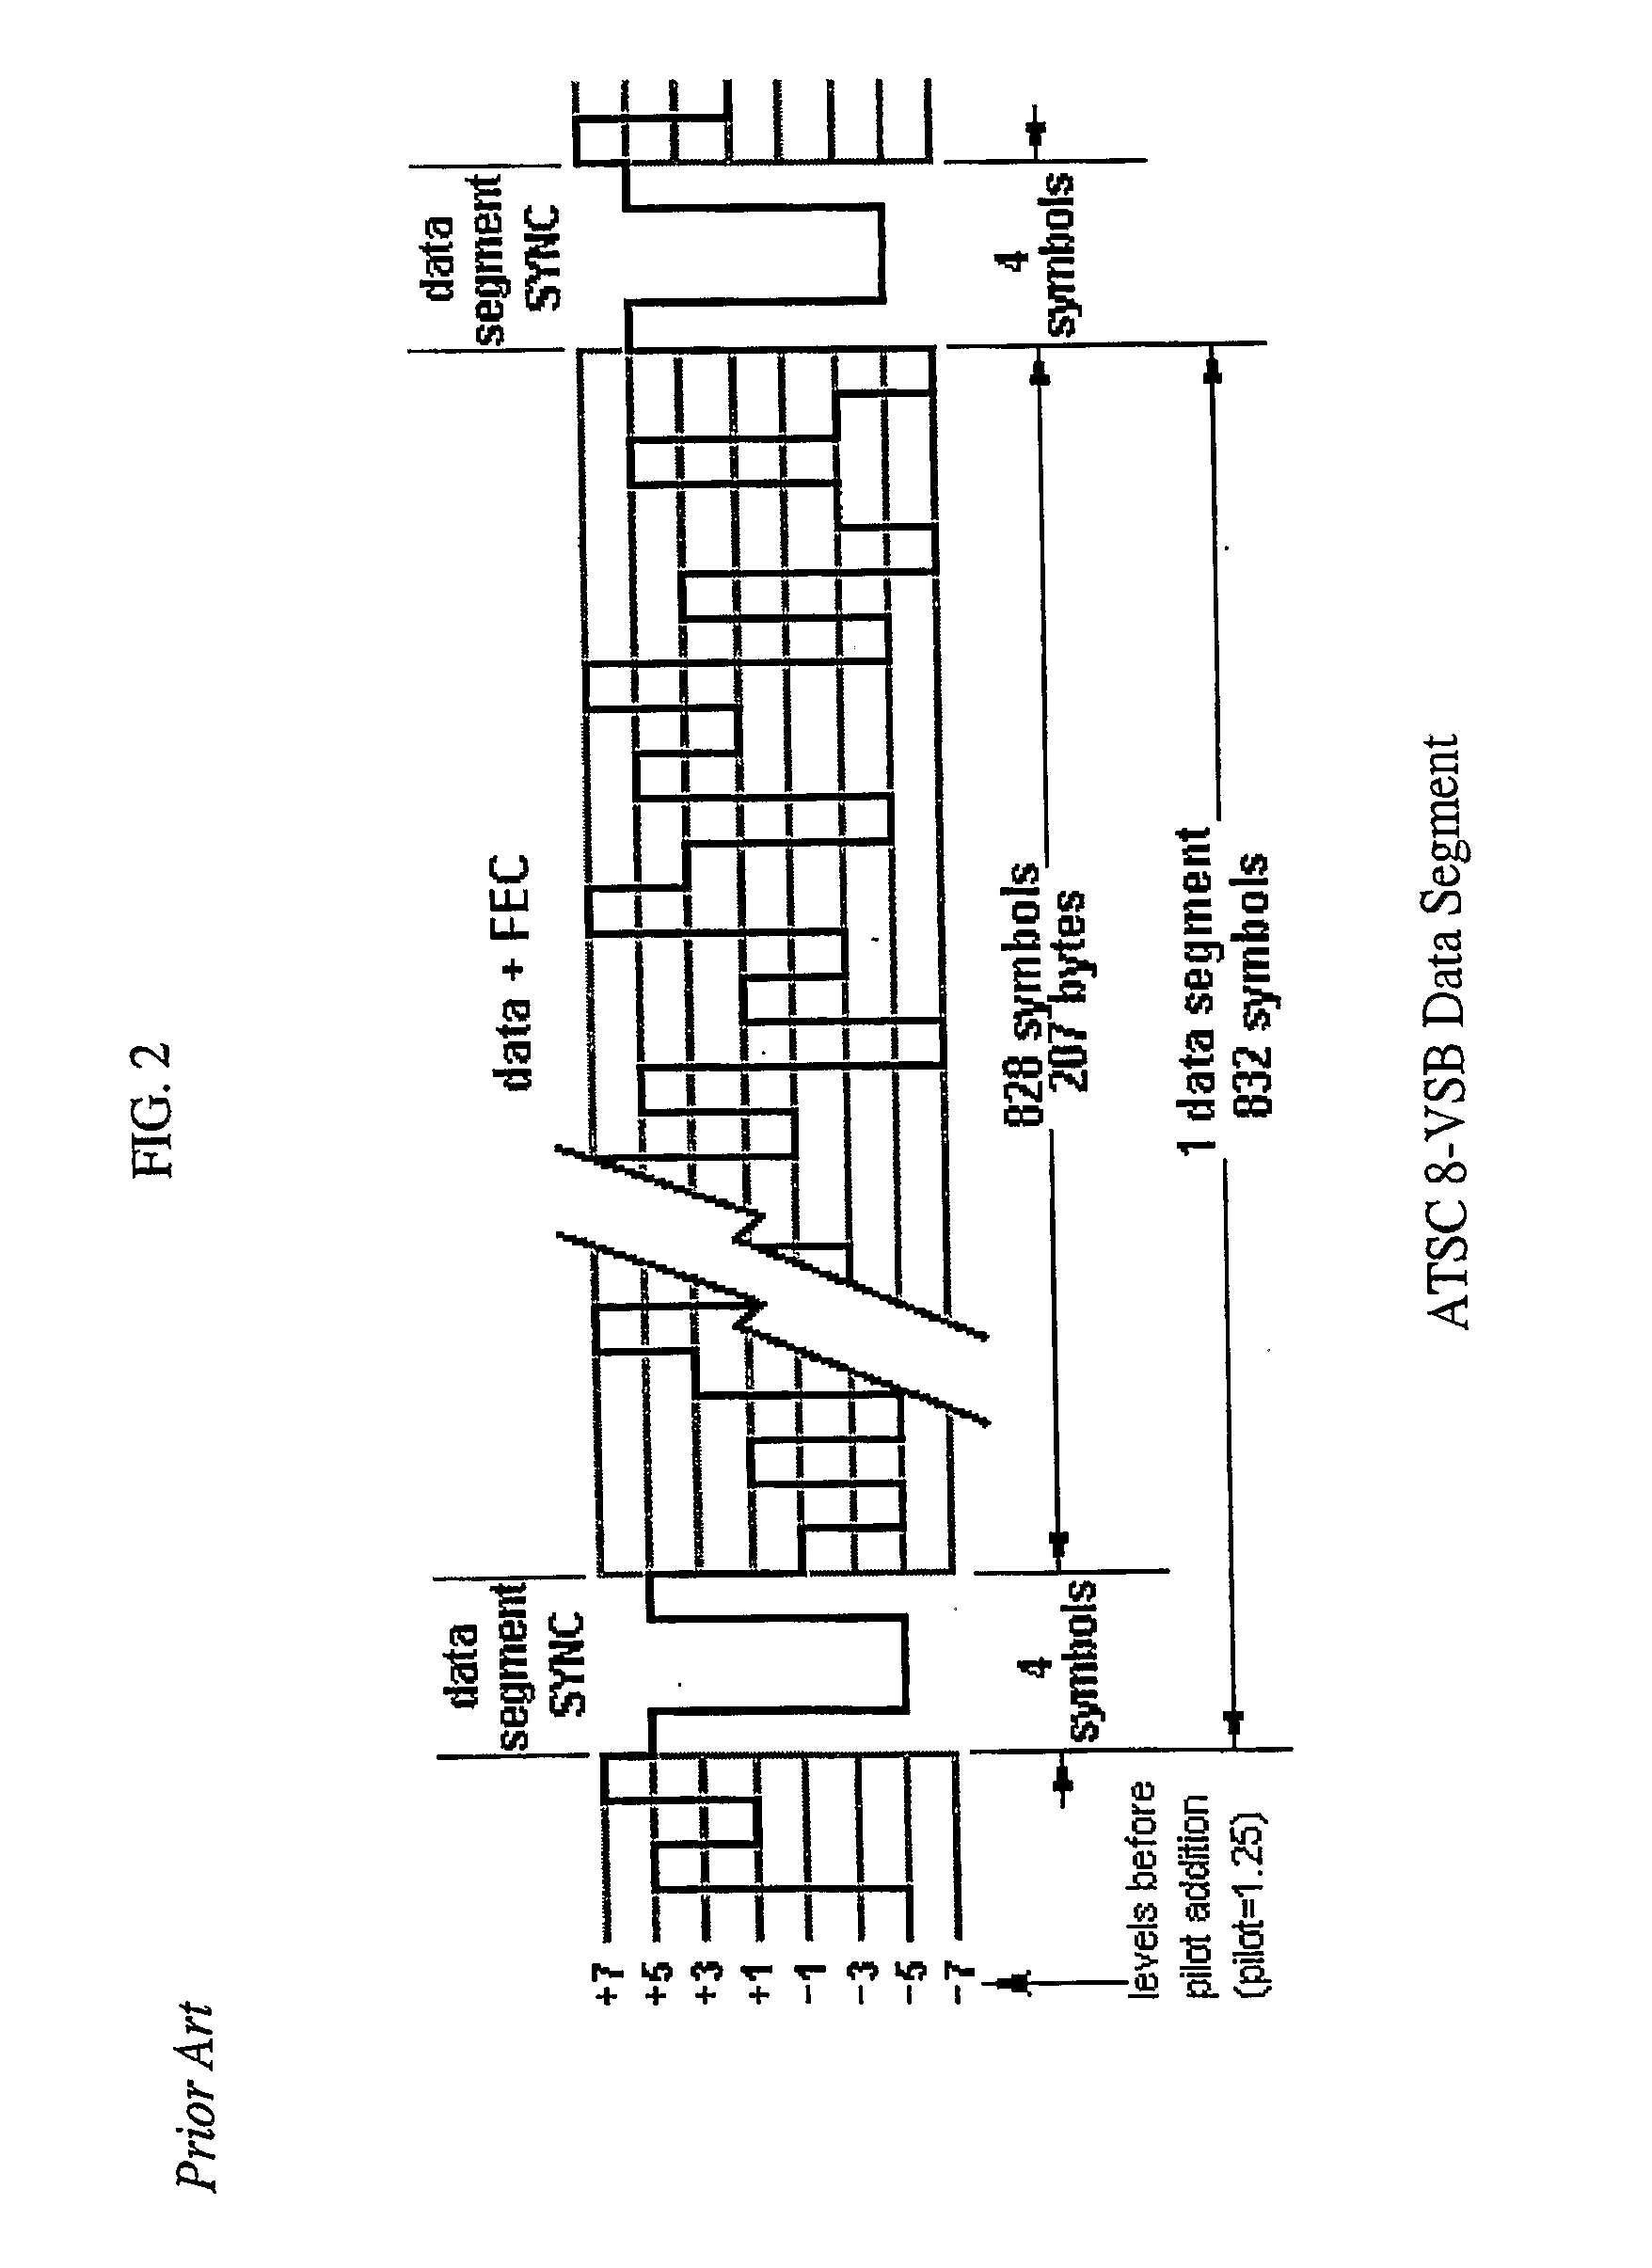 Apparatus and method for sensing a signal using cyclostationarity